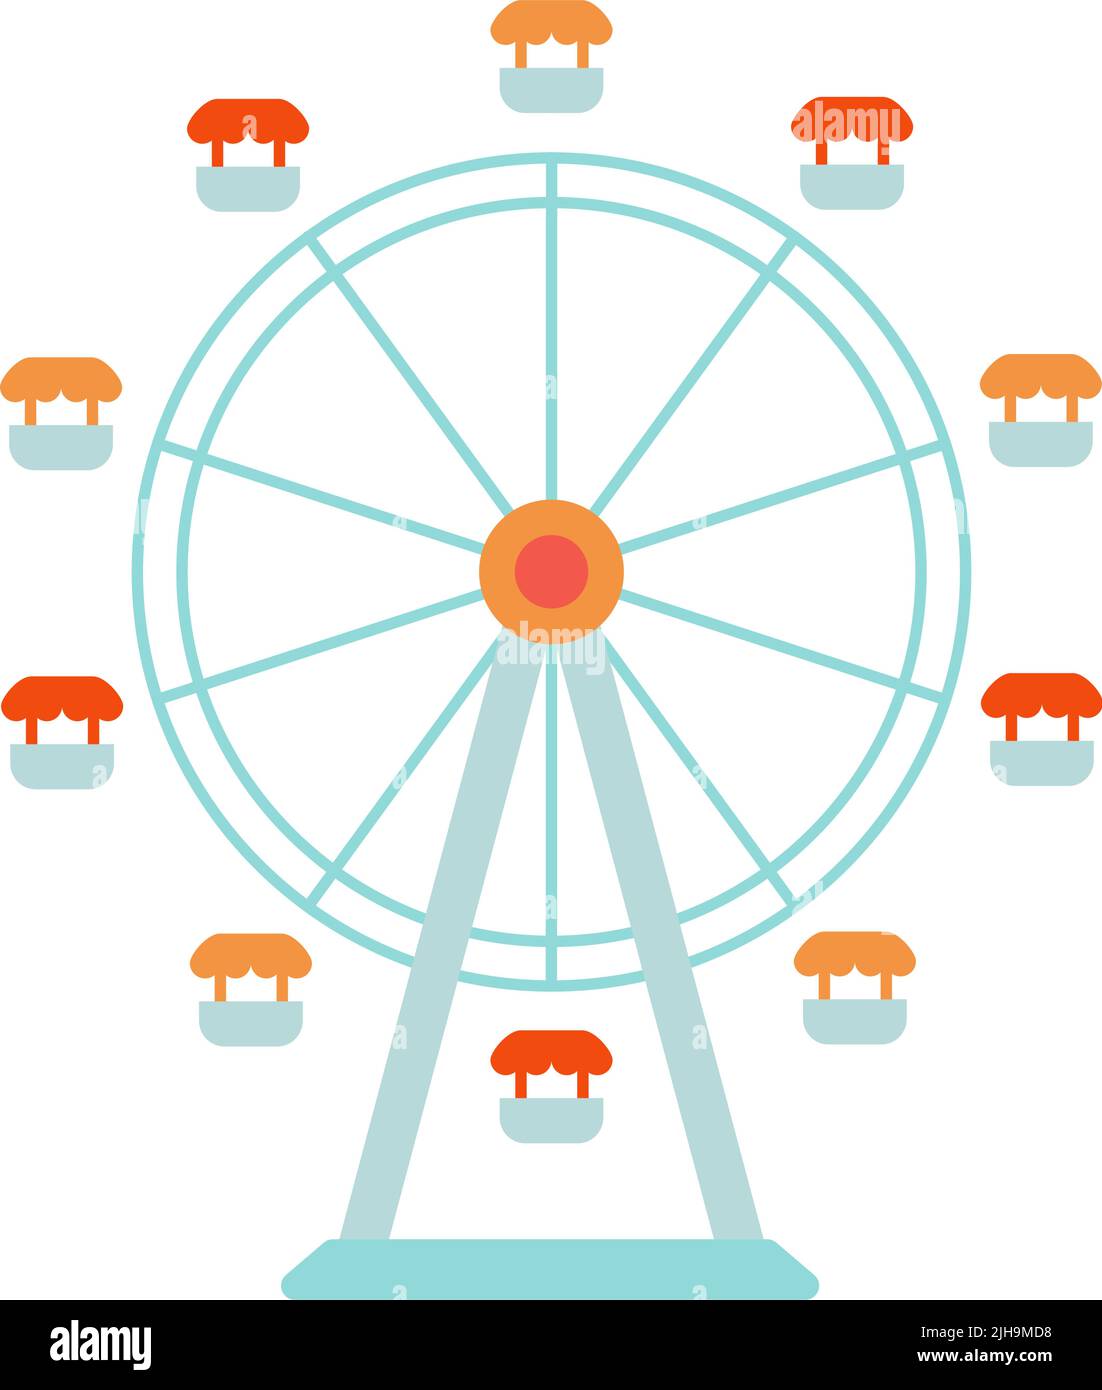 Ferris wheel for a fair or amusement park ride as a simple colorful vector icon Stock Vector